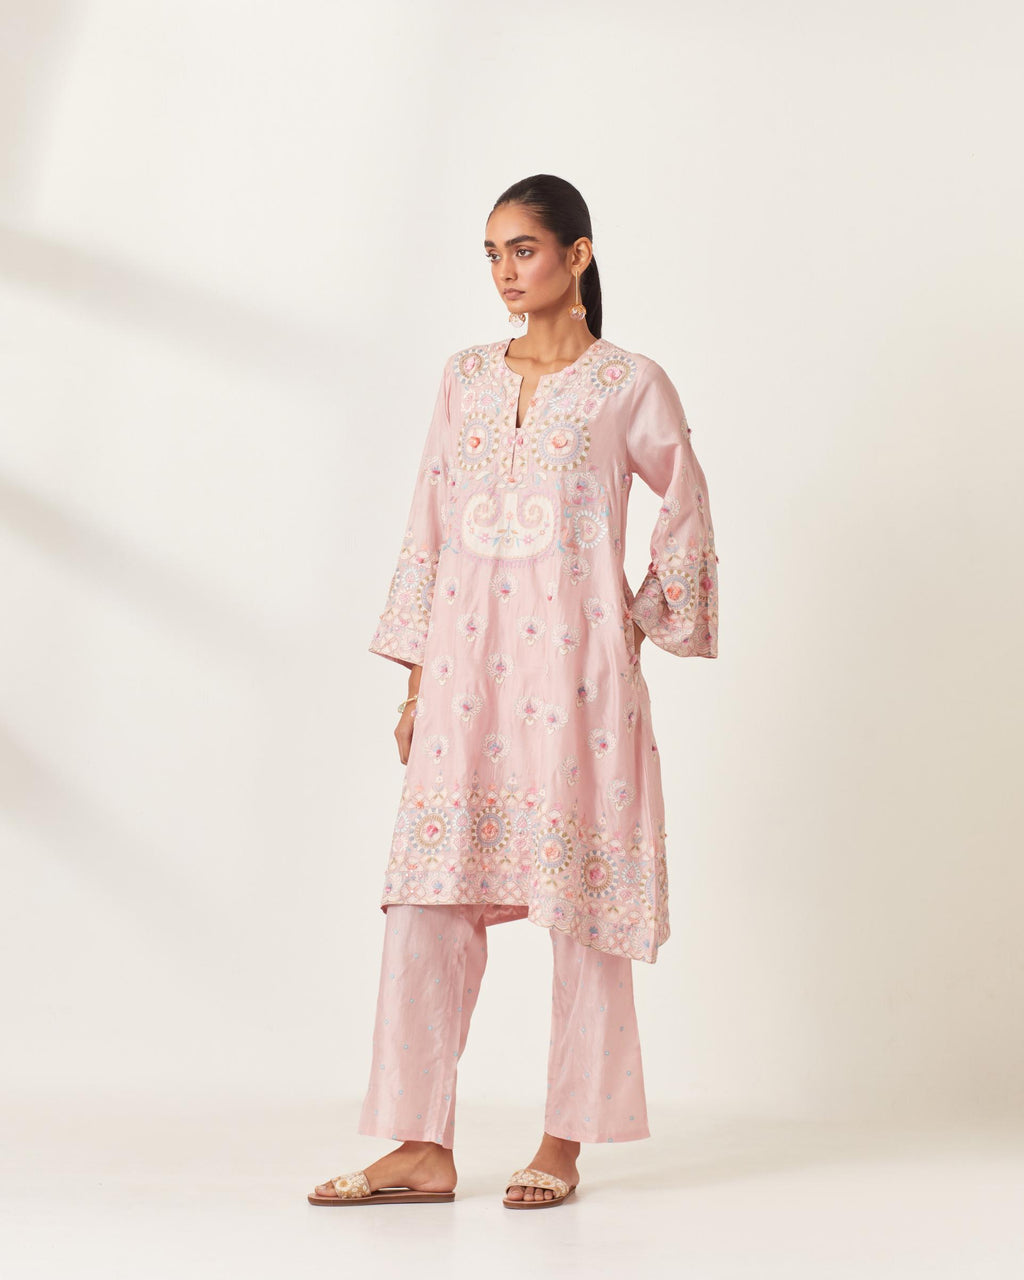 Pink silk straight hem mid-length abha style kurta set with bold appliqué embroidery along with multi-colored aari thread work and tassels.